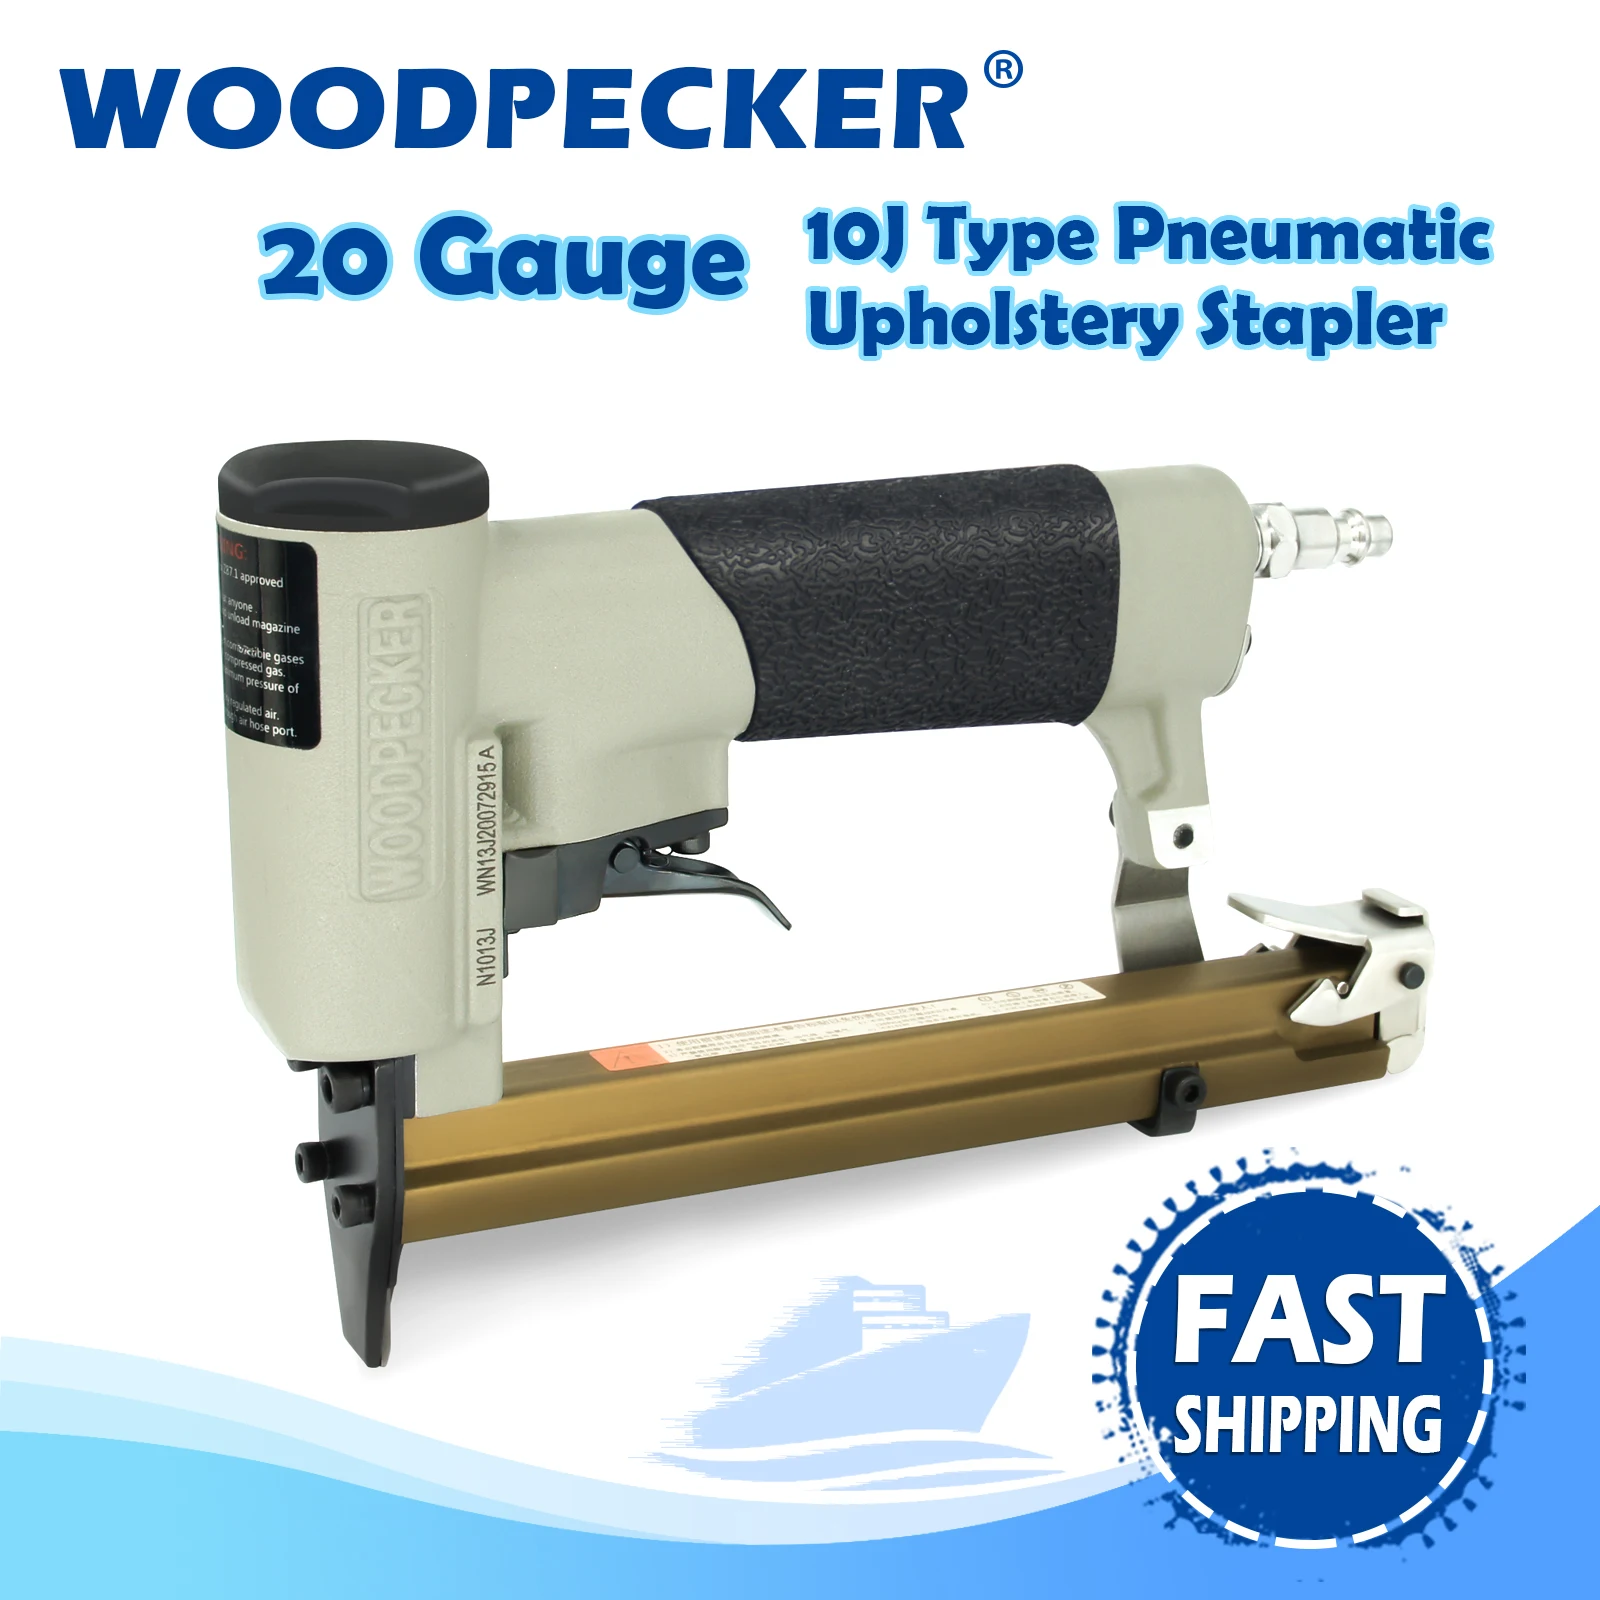 WOODPECKER N1013J 20 Gauge 10J Type Pneumatic Upholstery Stapler, Fits 11.2mm Crown 4-13mm Length Staples, for Woodworking